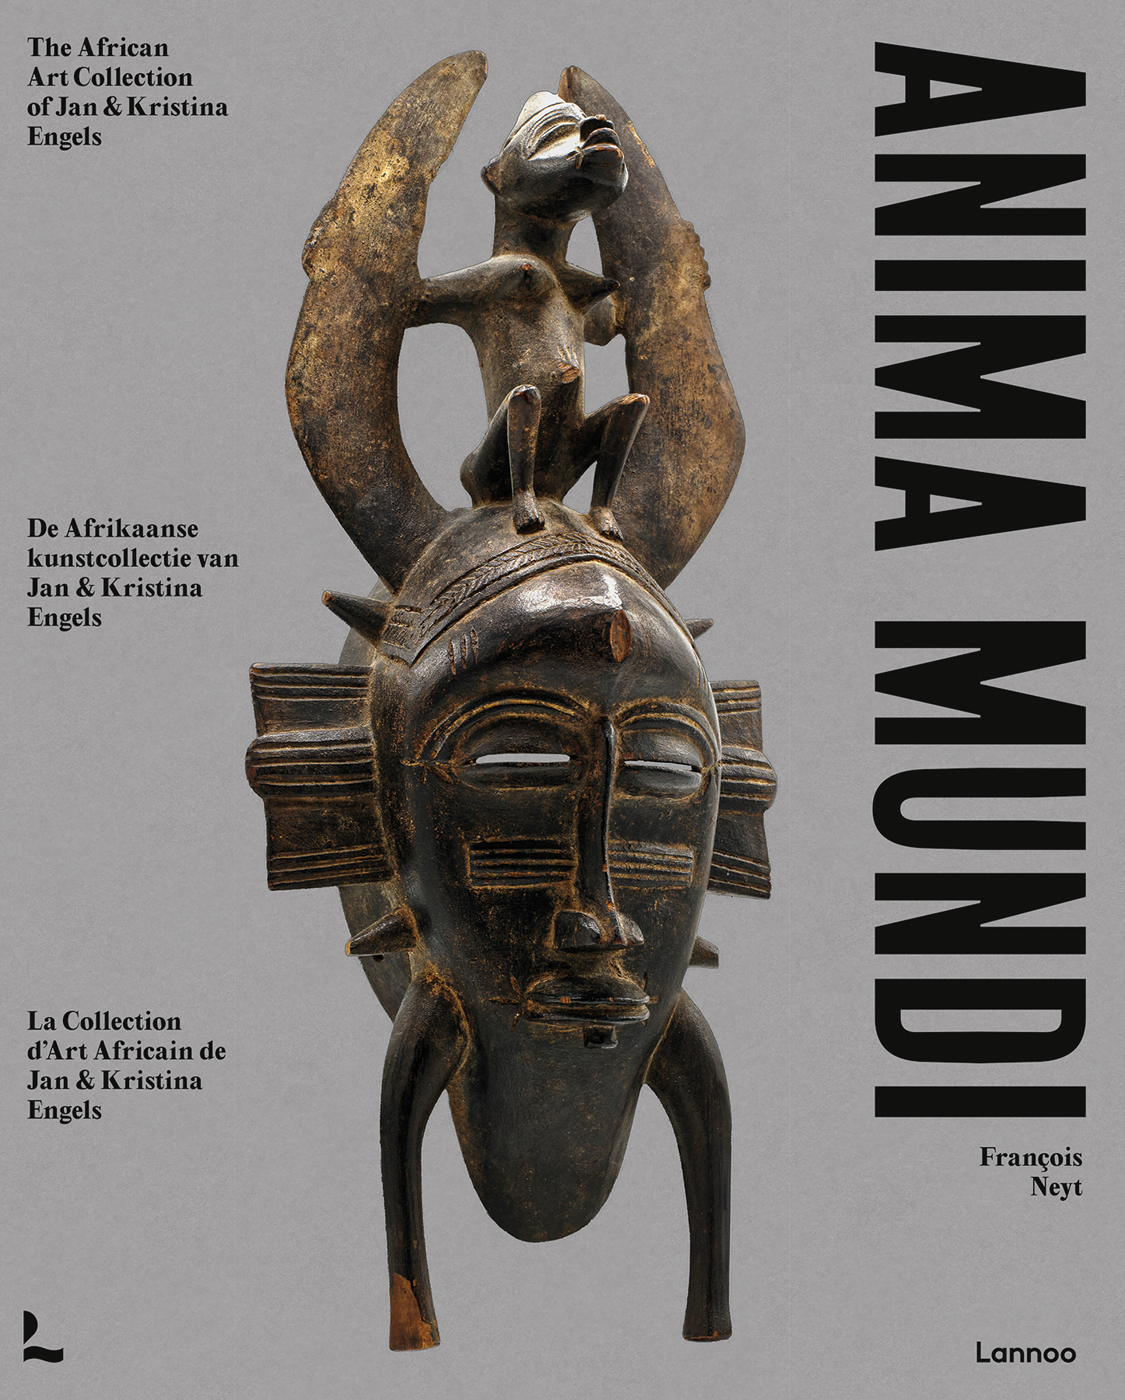 catalogo anima mundi 2005 by Anima Mundi - Issuu